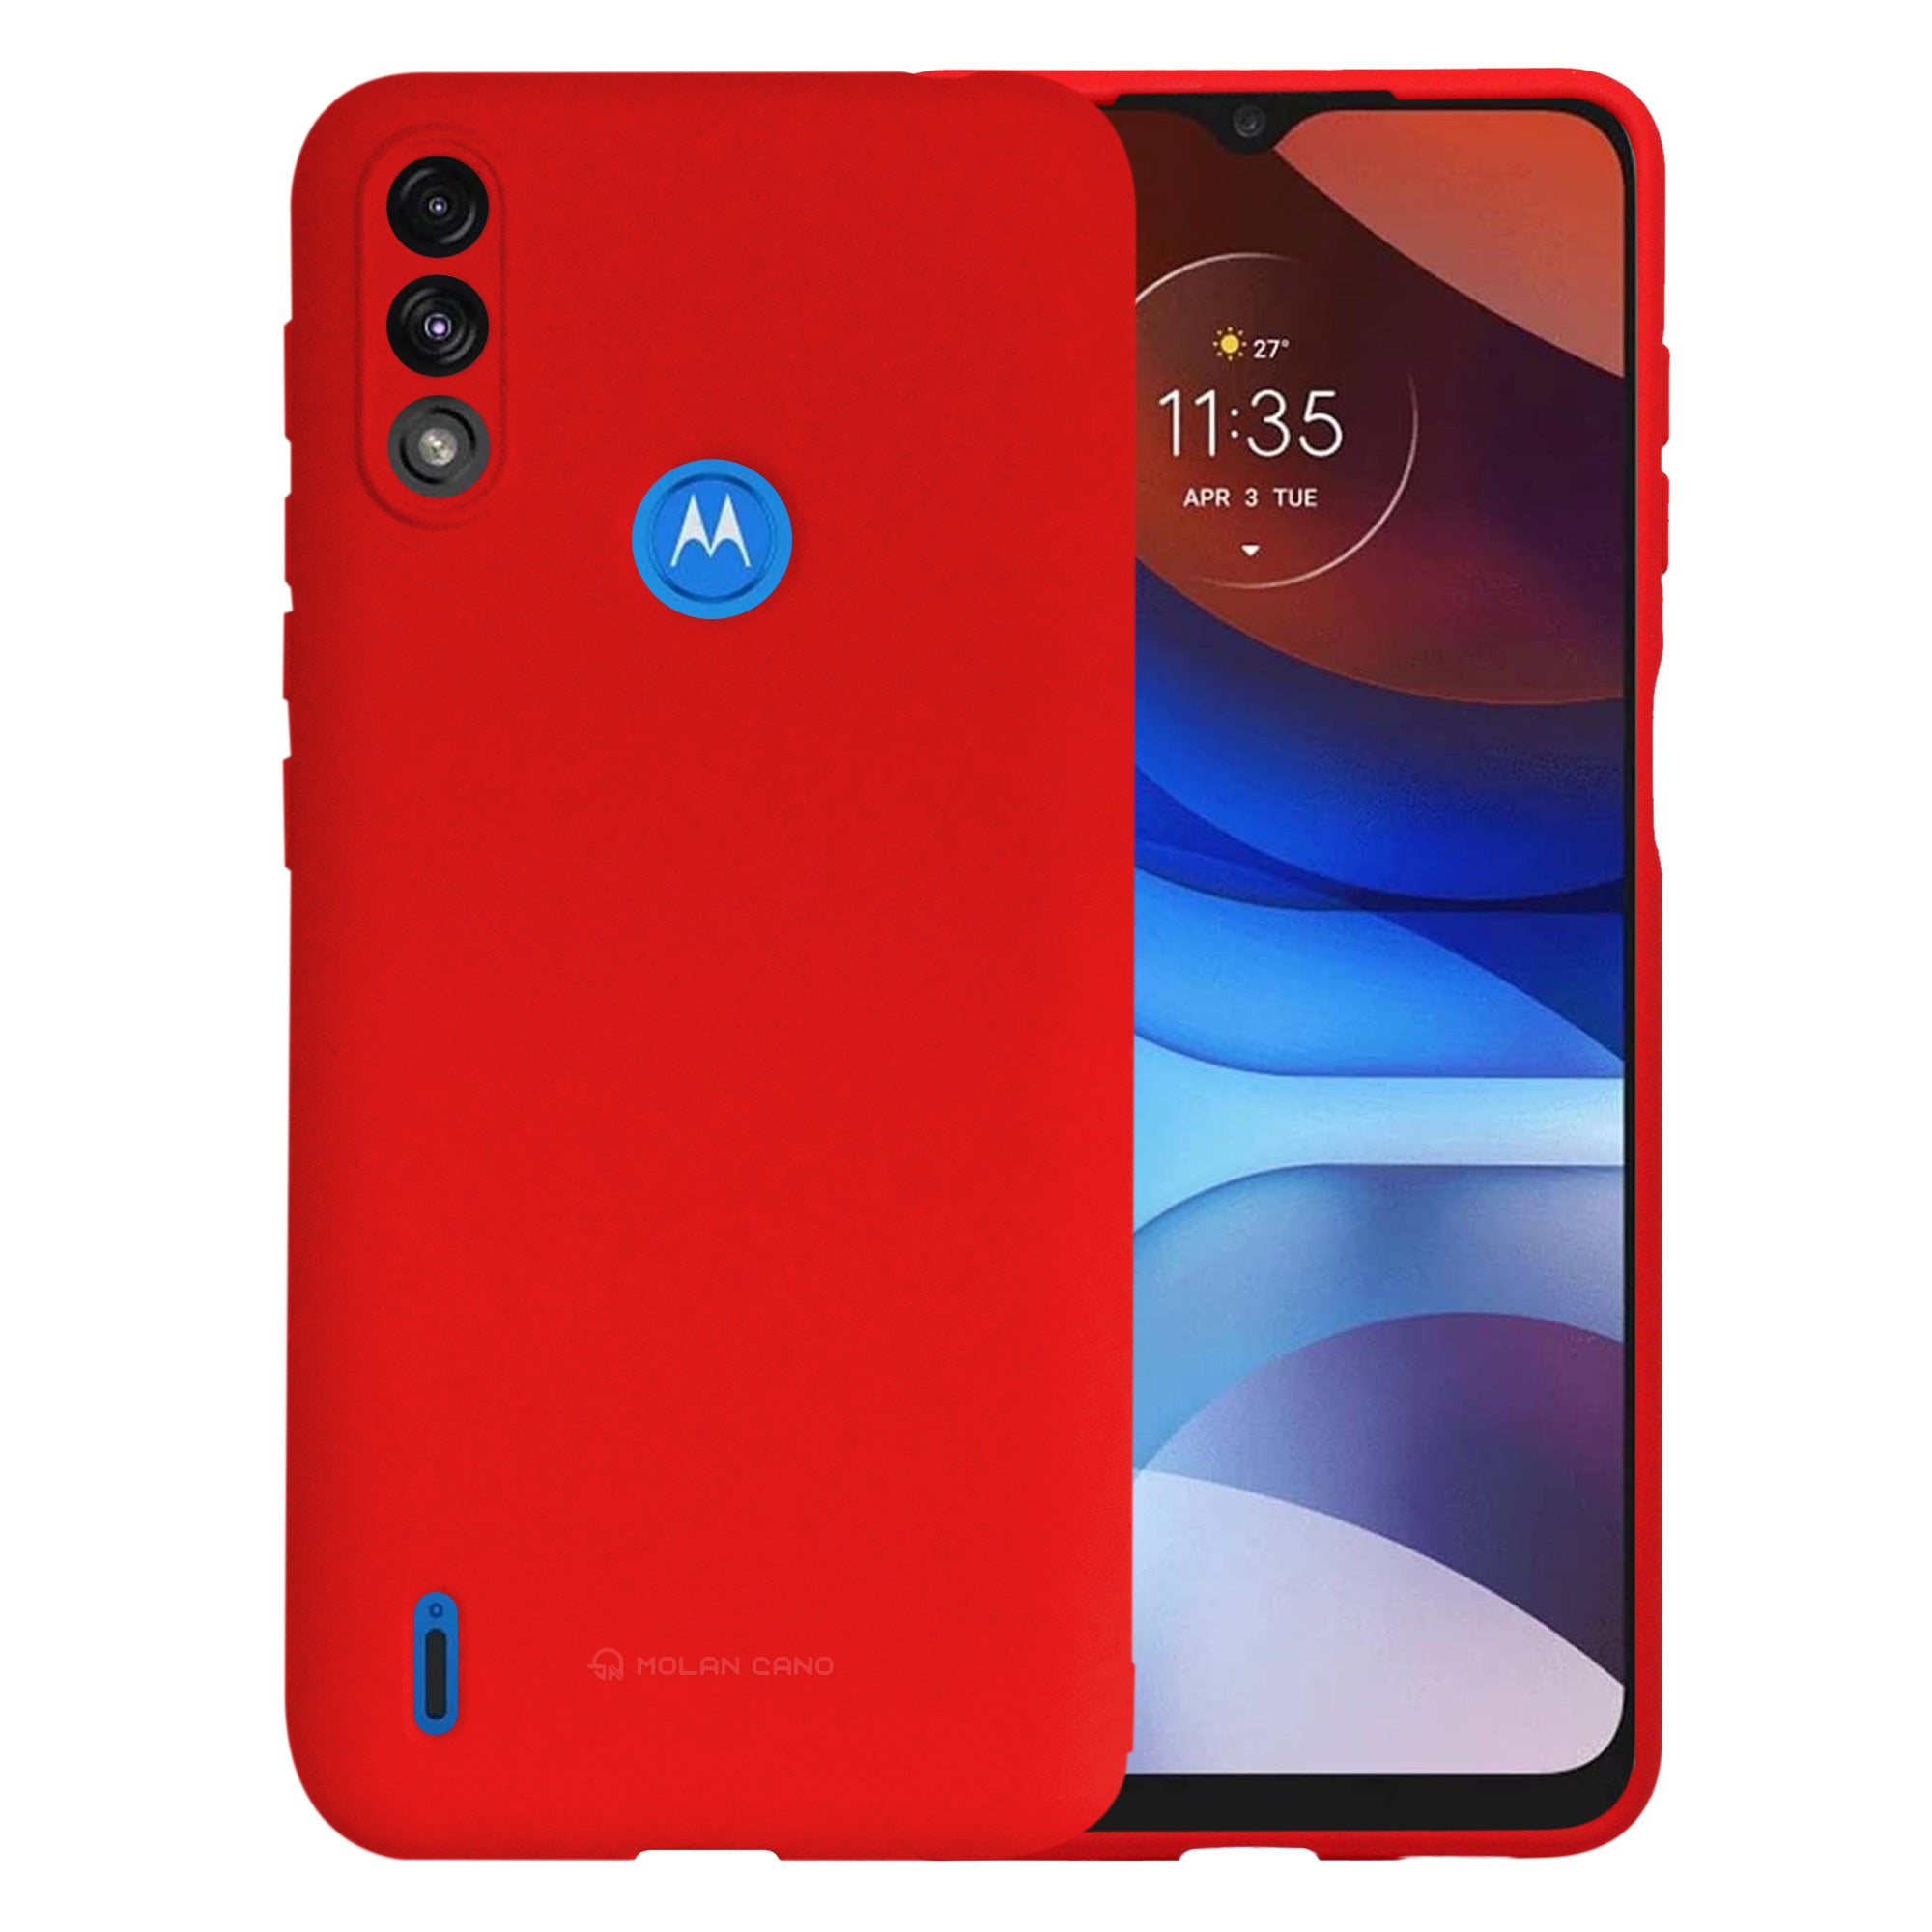 Carcasa Iphone X , Iphone Xs Protectora Anilla-soporte – Rojo con Ofertas  en Carrefour